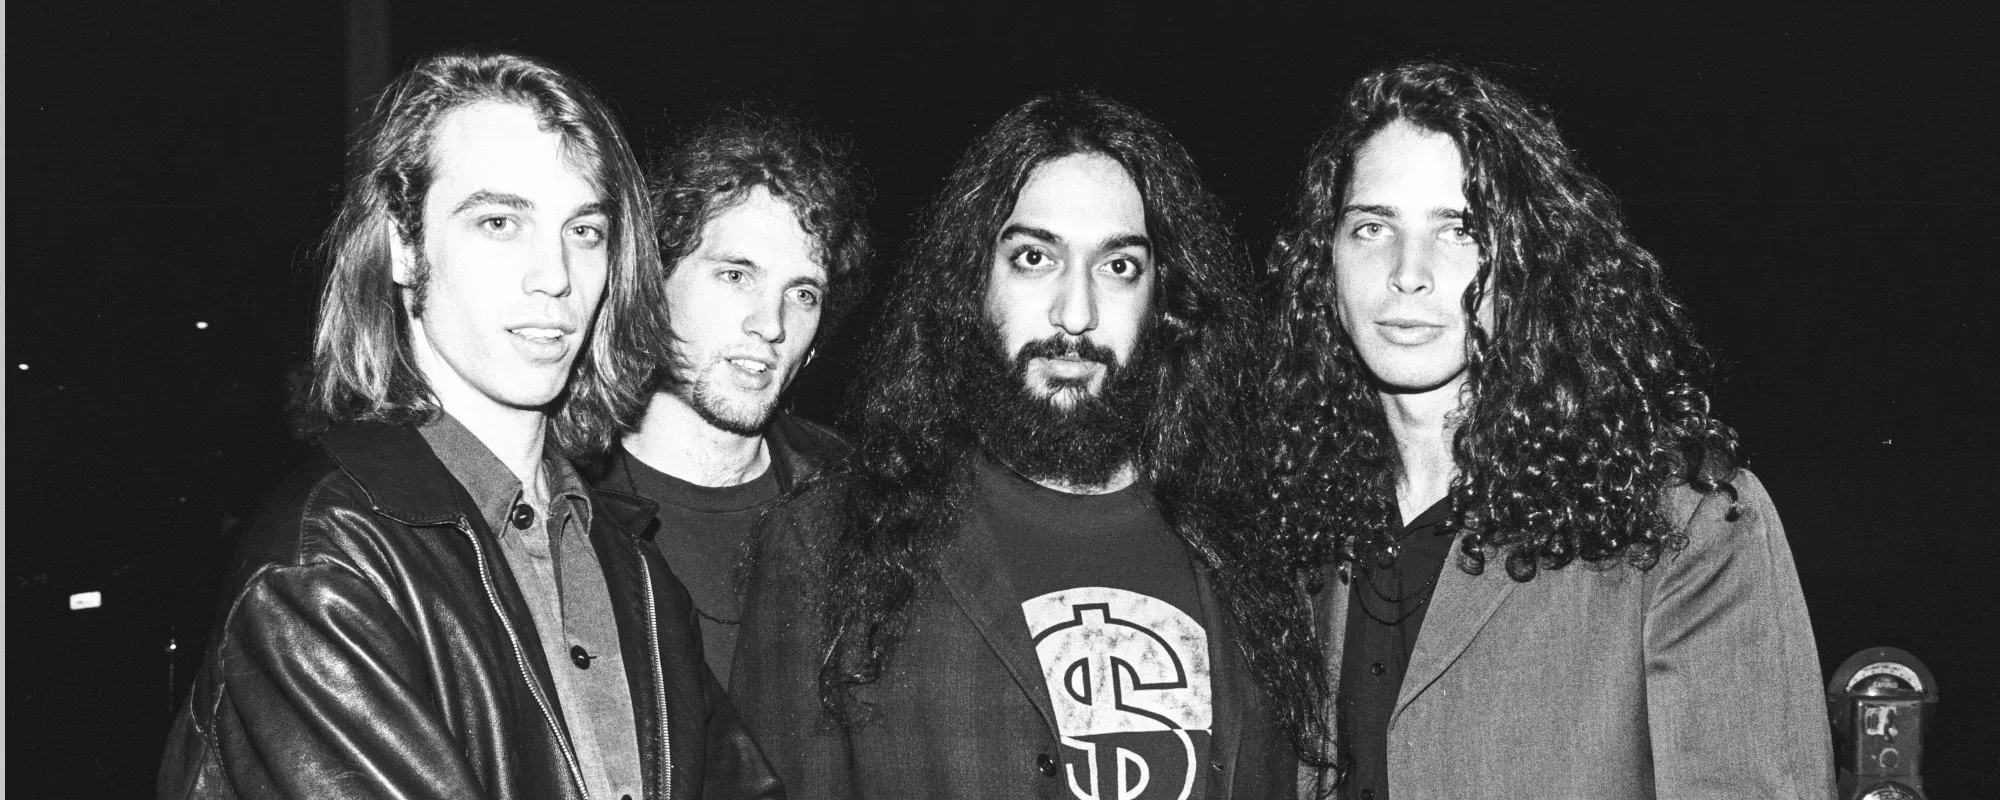 Meet the Writer of Soundgarden’s “Black Hole Sun”